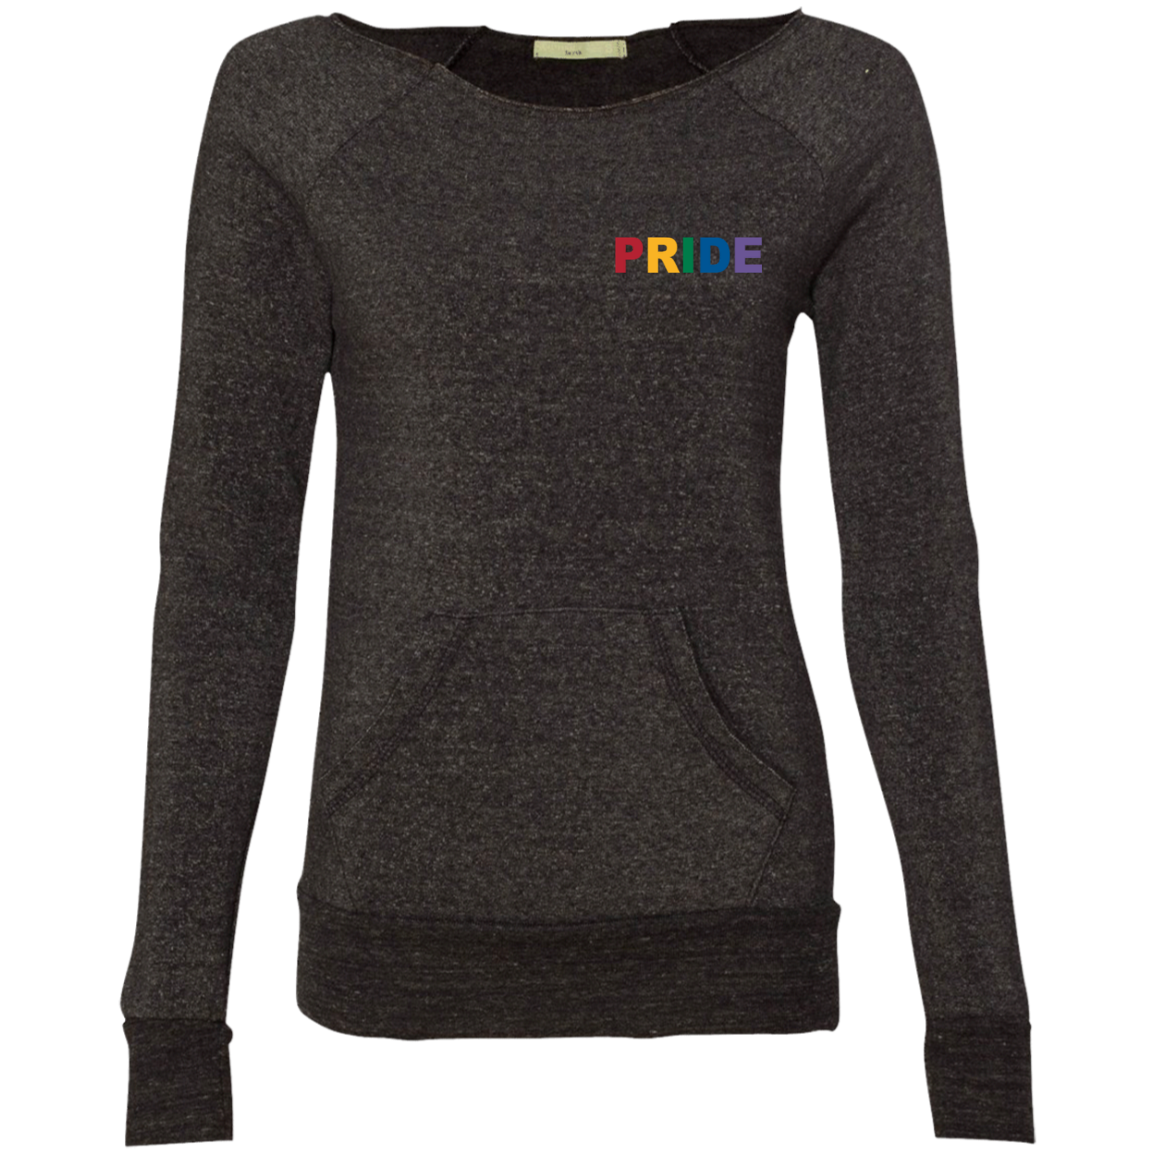 Best LGBT Pride Sweatshirts for Men & Women